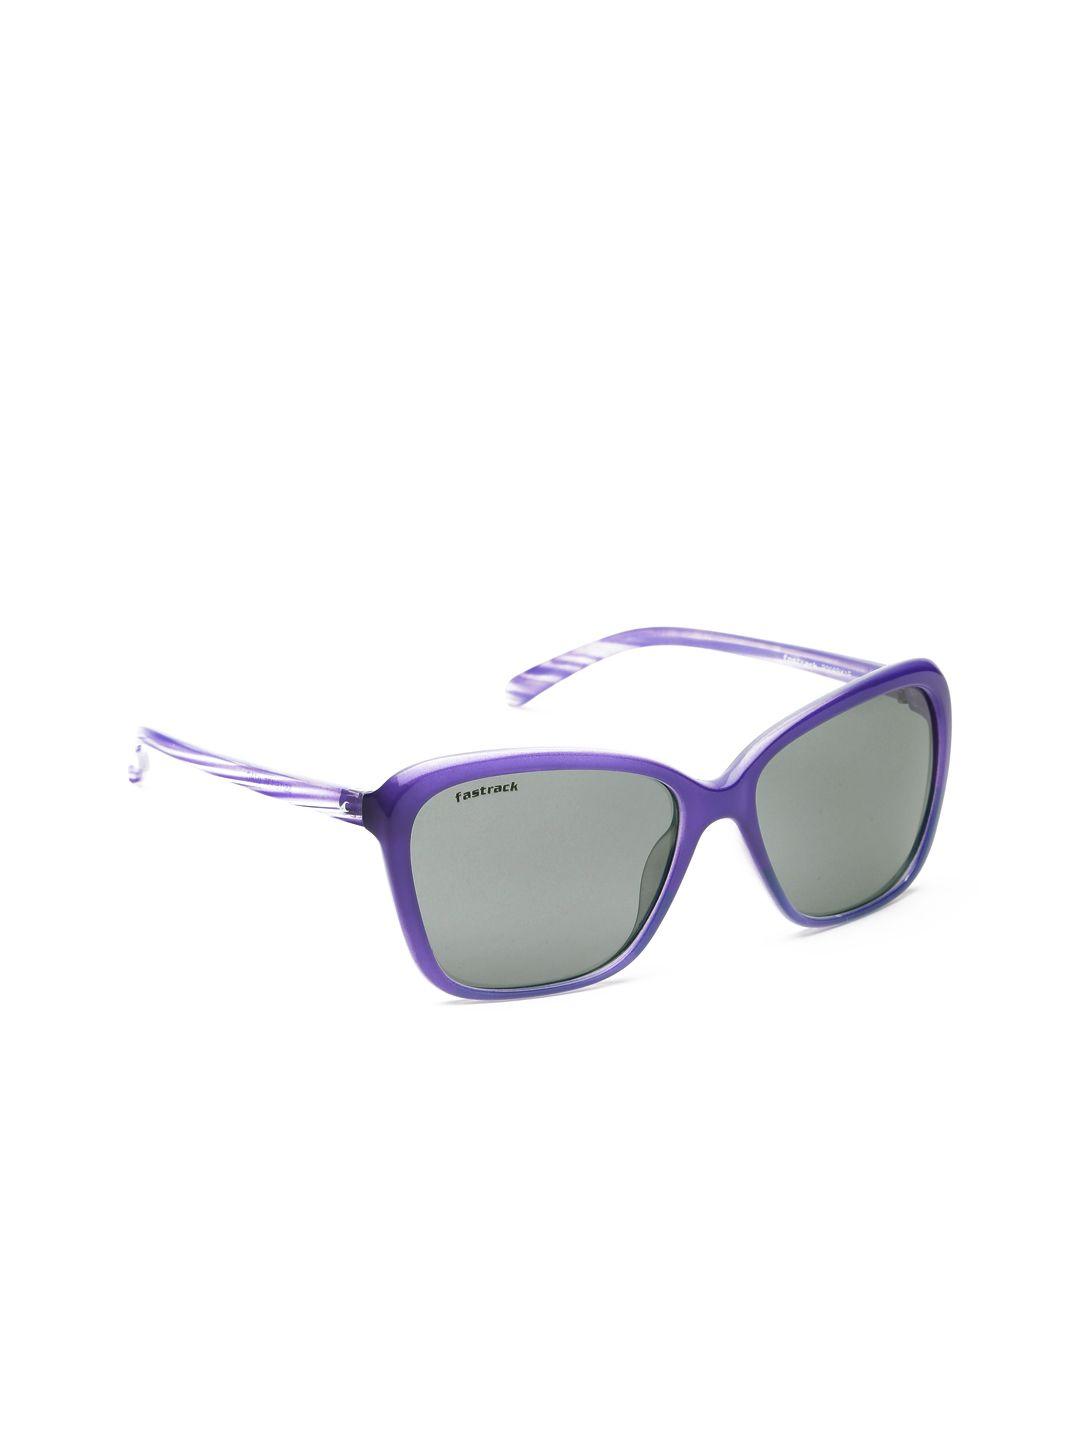 fastrack-women-sunglasses-p306bk1f